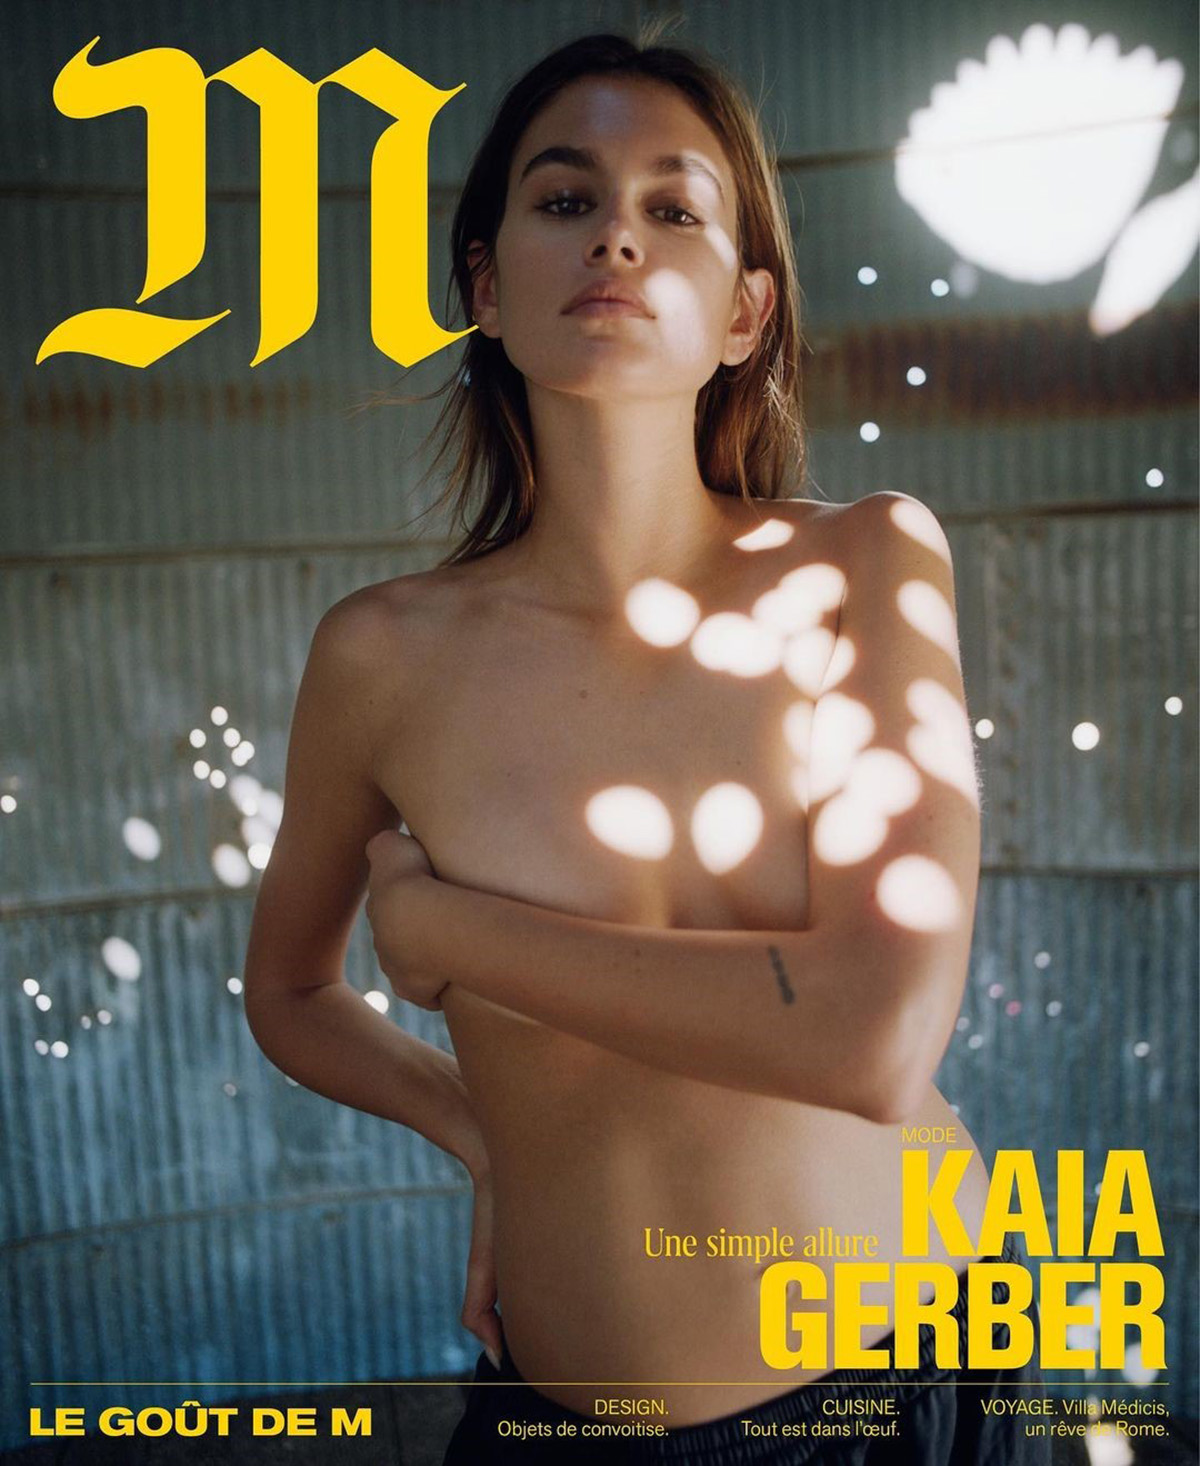 Kaia Gerber covers M Le magazine du Monde November 6th, 2021 by Zoë Ghertner